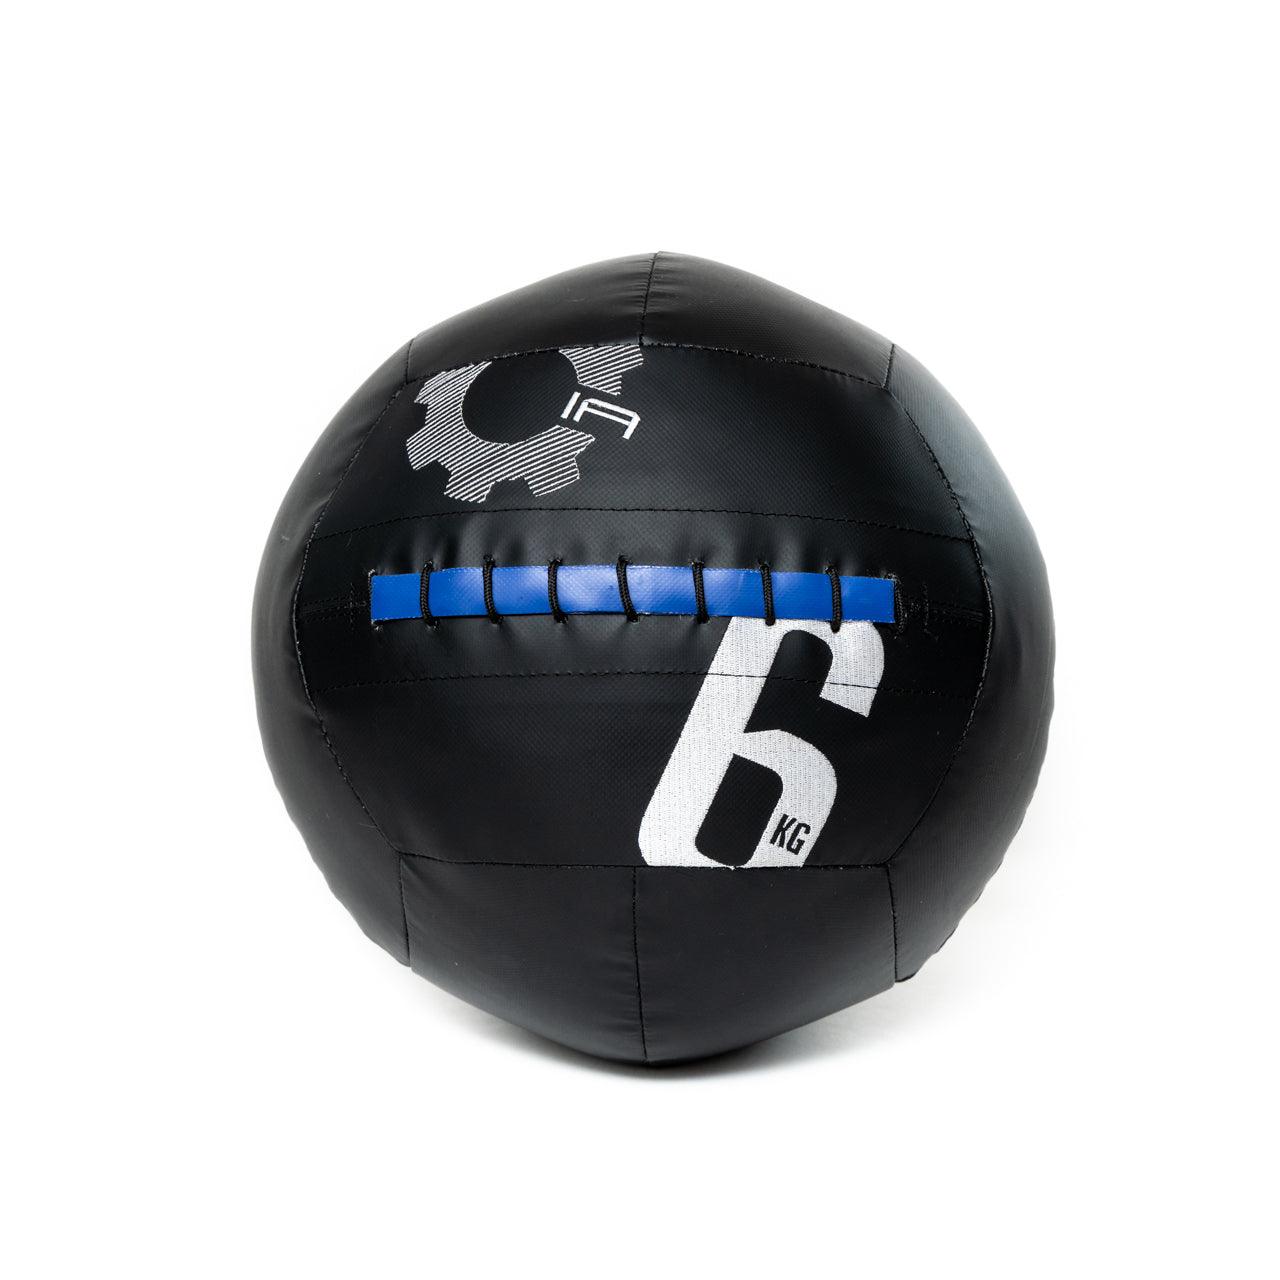 6kg Medicine Ball - V3 - Industrial Athletic